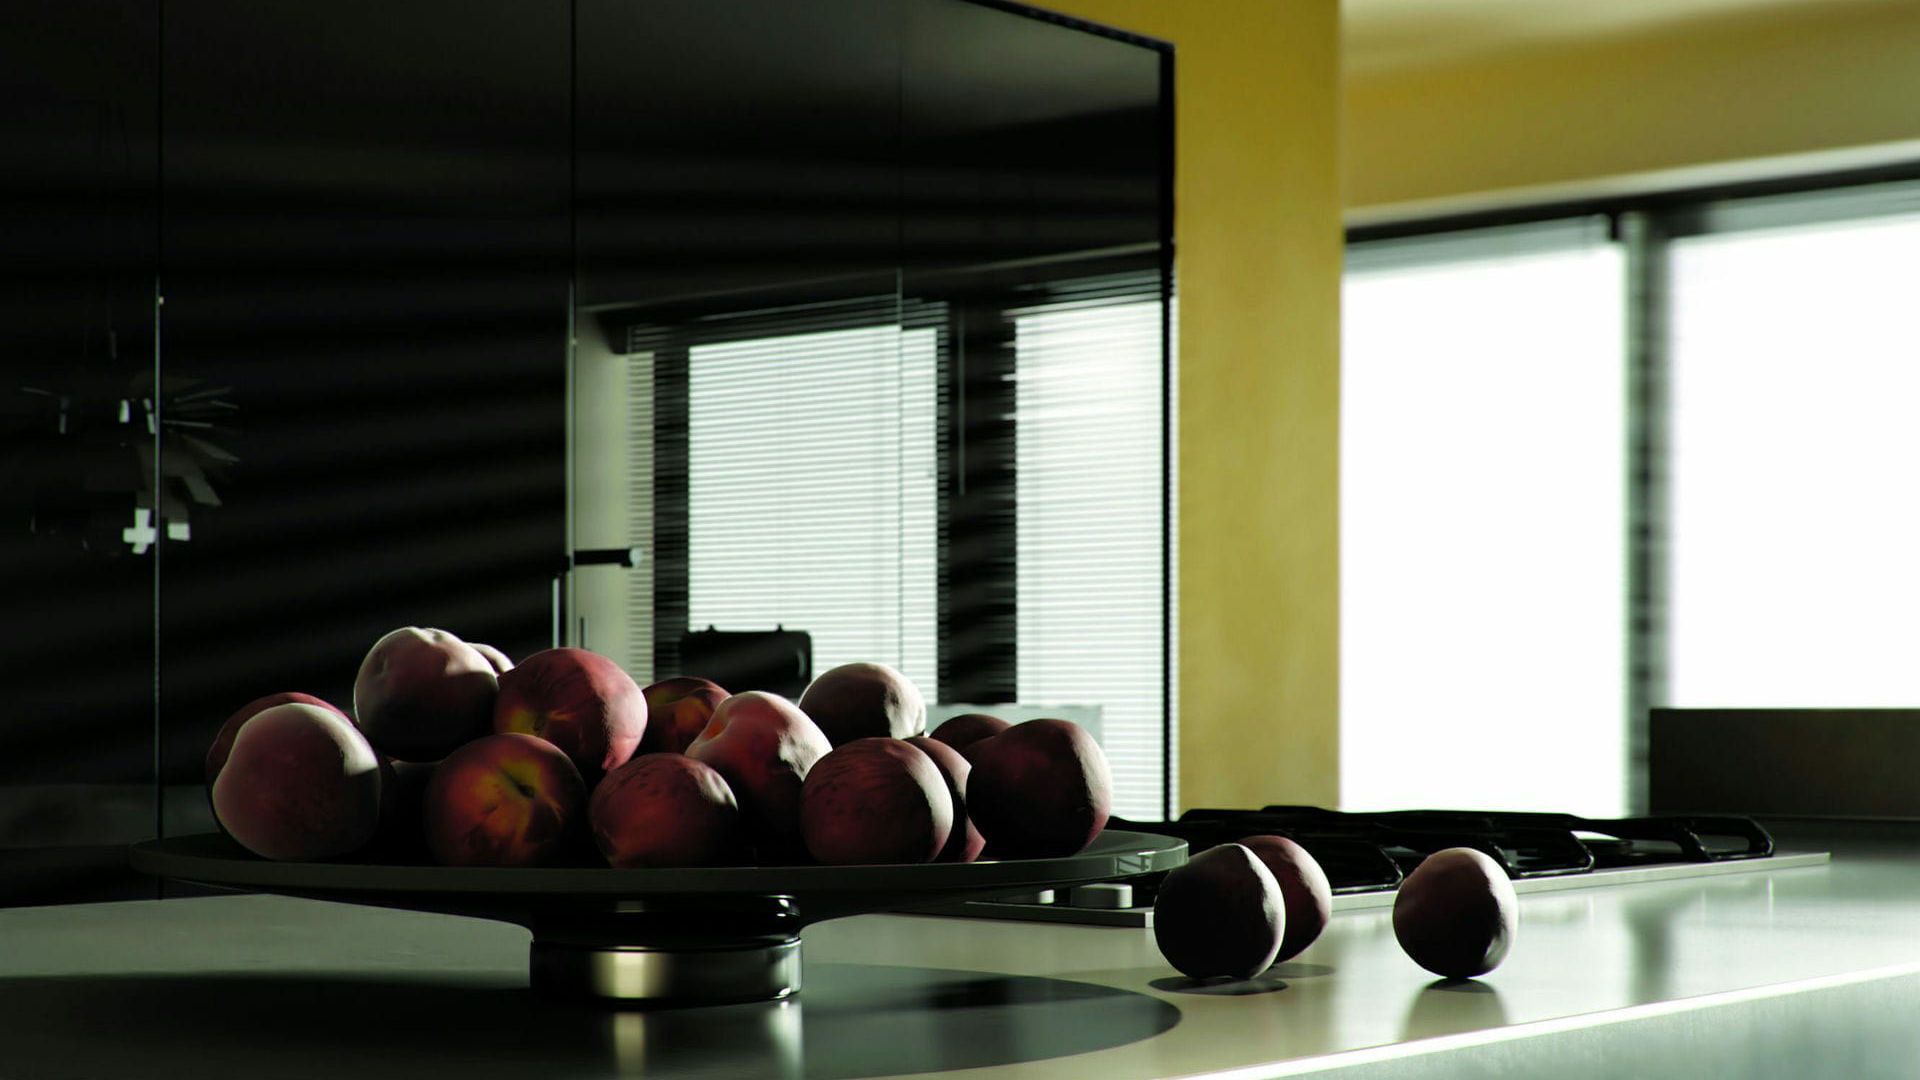 Gloss acrylic Jet Black kitchens boasting a mirror-like finish for a sleek and impactful design